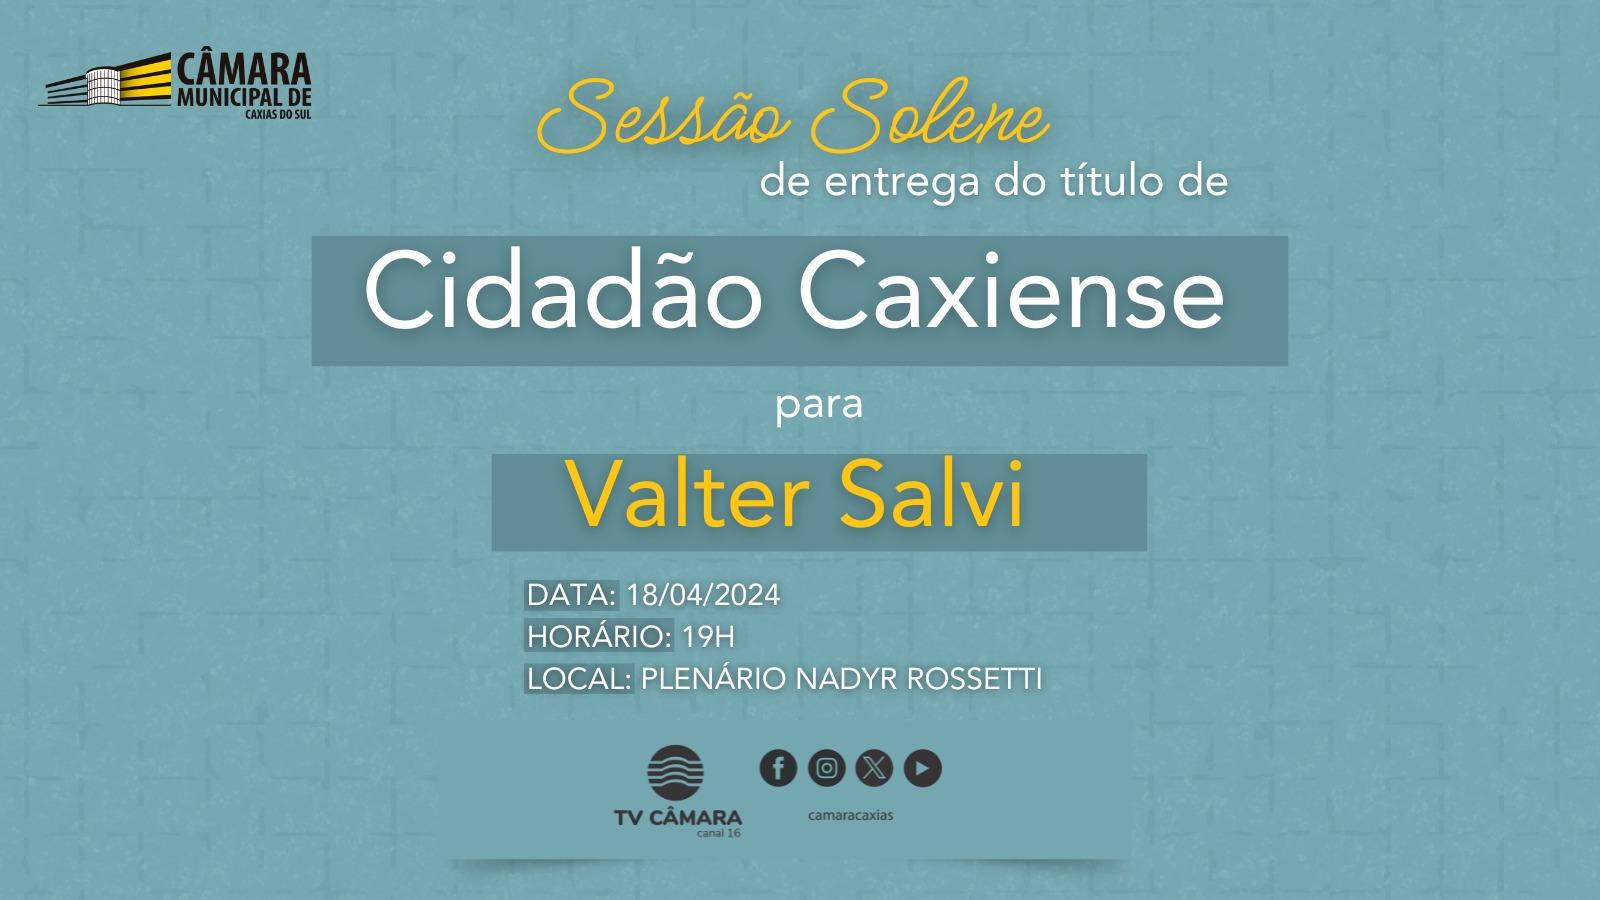 Empresário Valter Salvi receberá o título de Cidadão Caxiense nesta quinta-feira